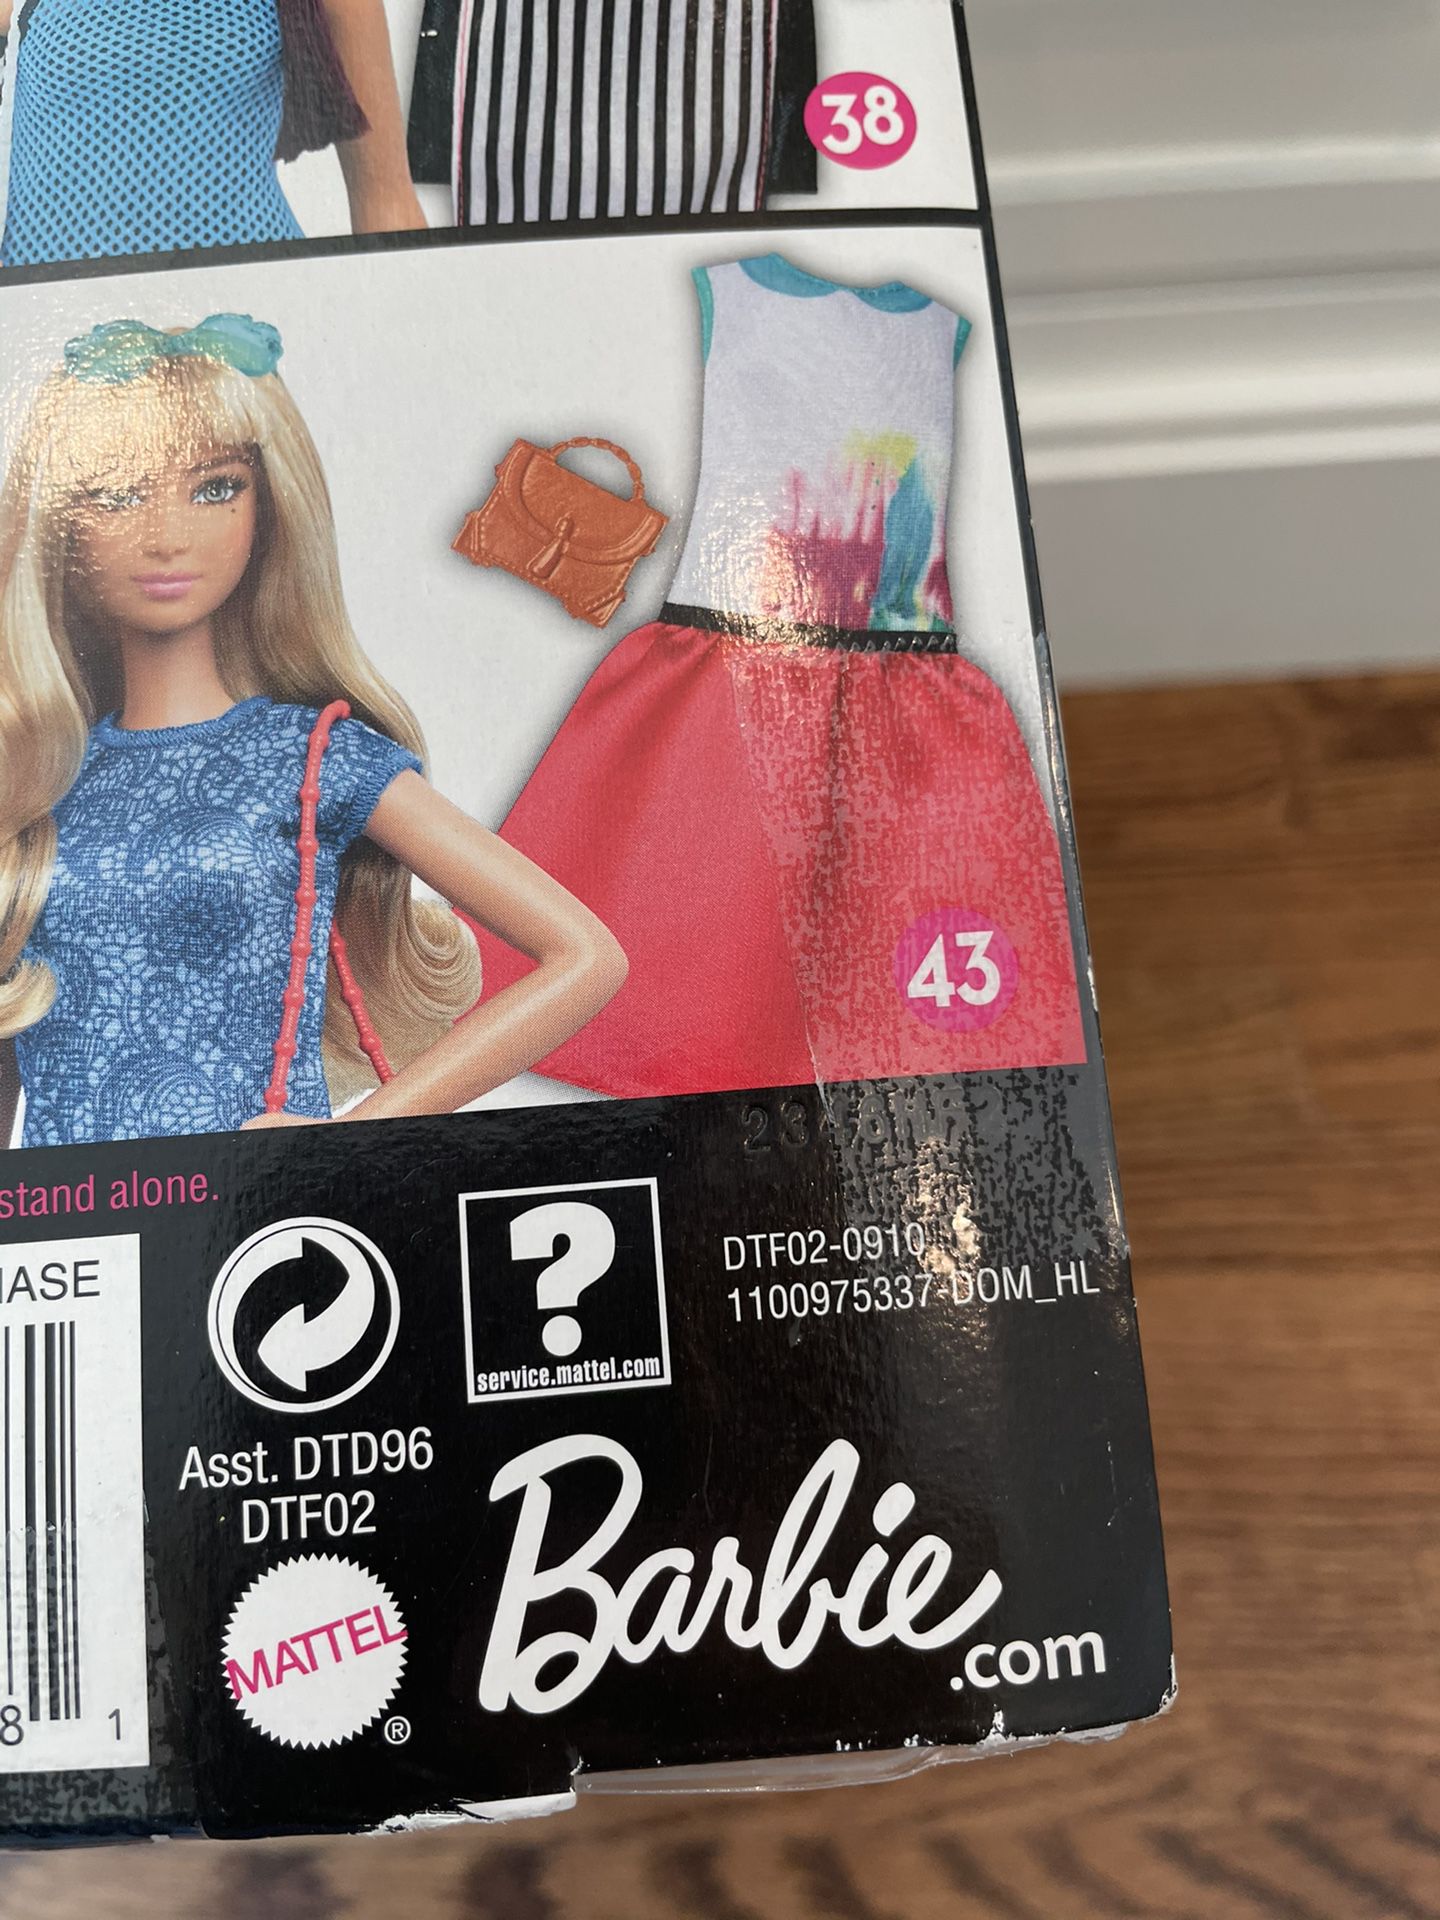 👠MOSCHINO Barbie 2️⃣0️⃣1️⃣5️⃣−9️⃣ Barbie Signature👚 Photo Galery 